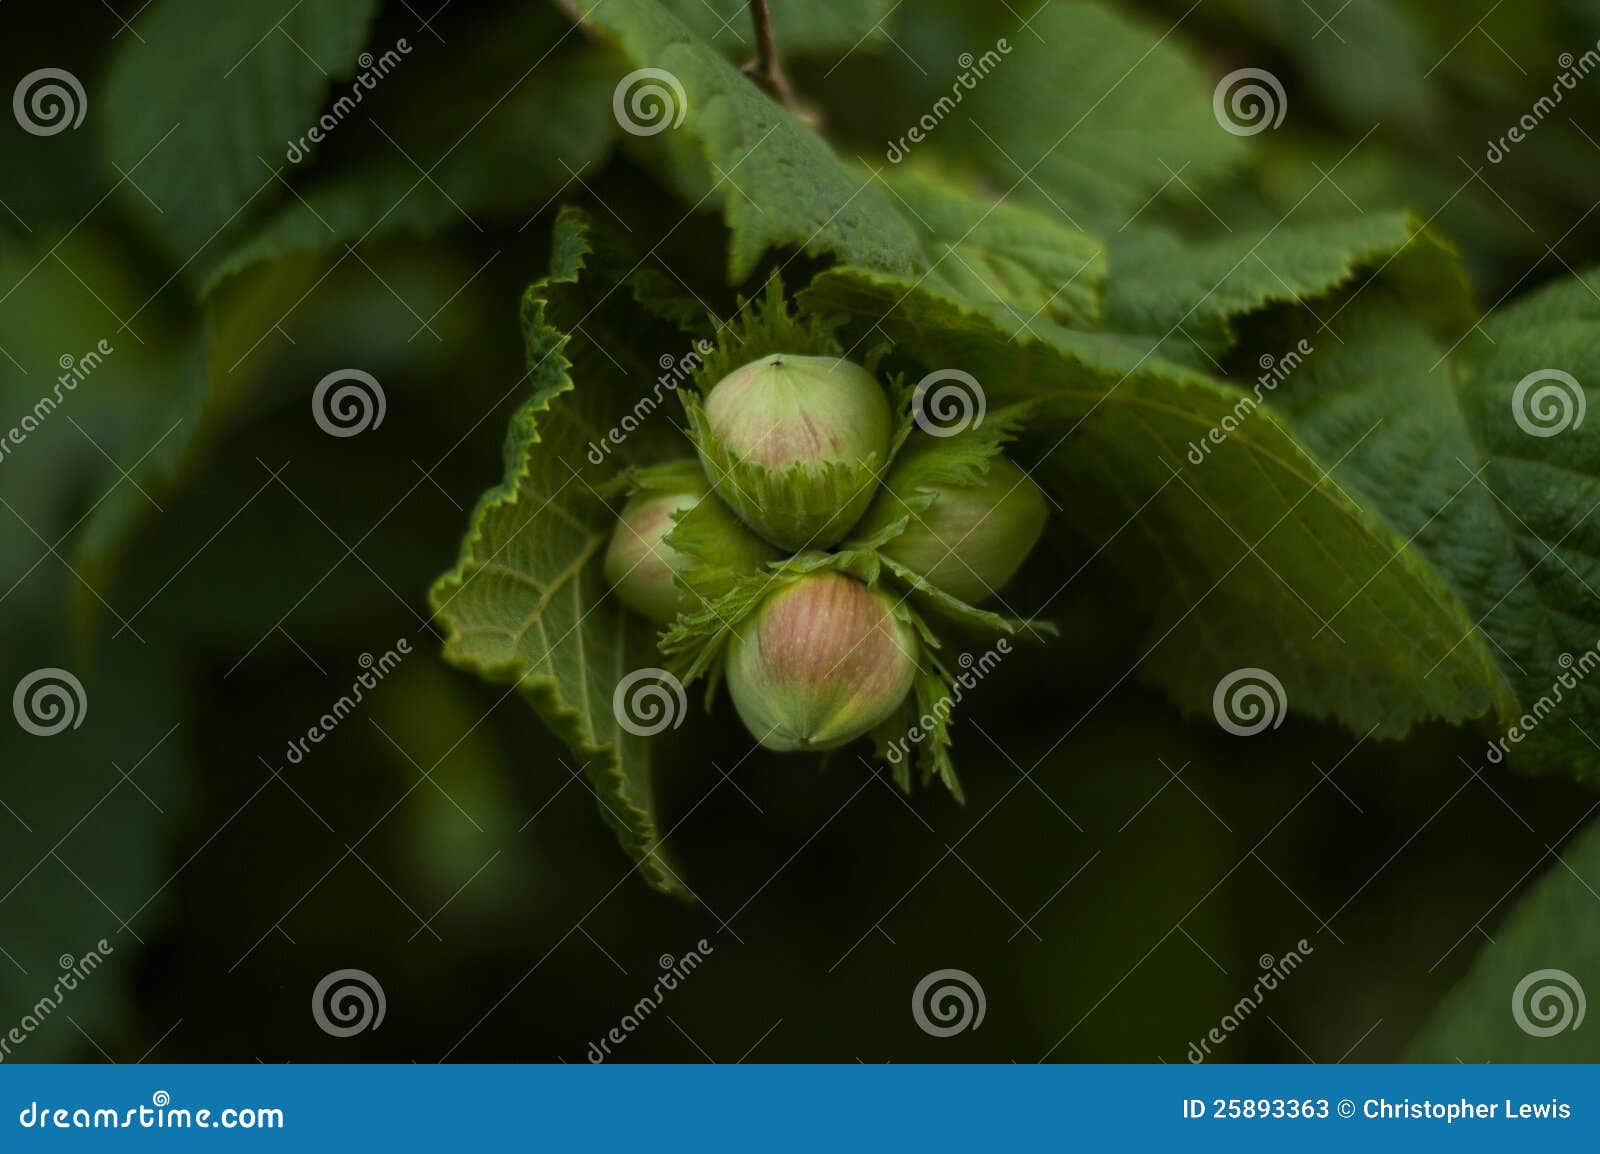 cob nuts on a hazel tree in summer